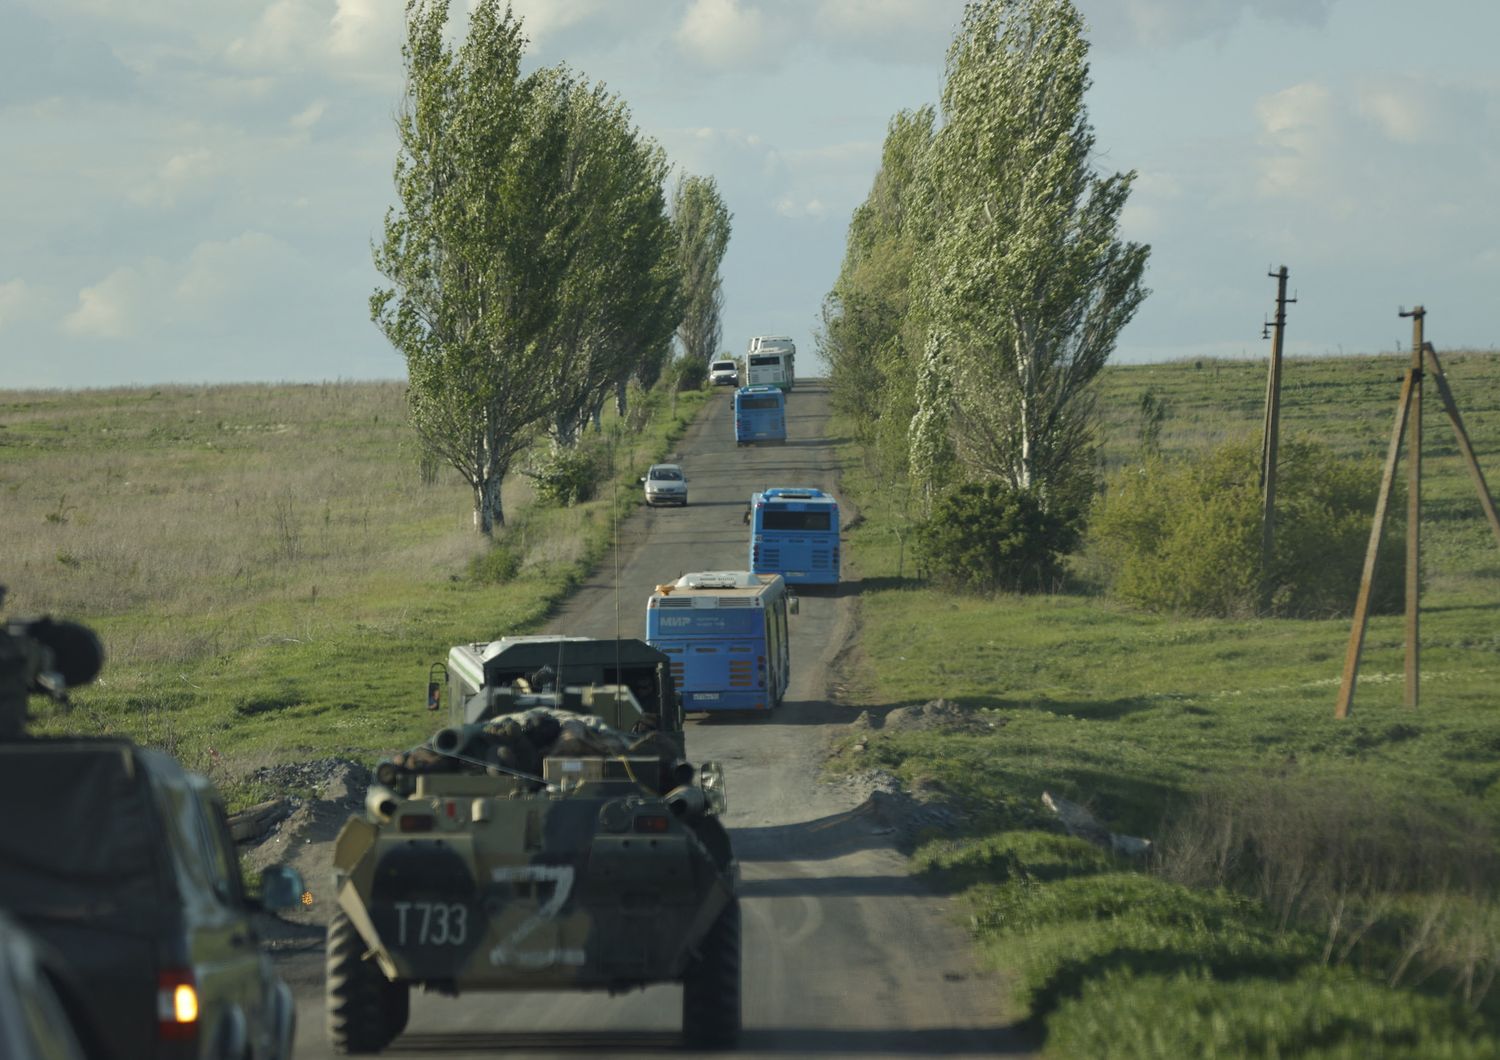 Trasferimento dei militari ucraini evacuati da Azovstal&nbsp;